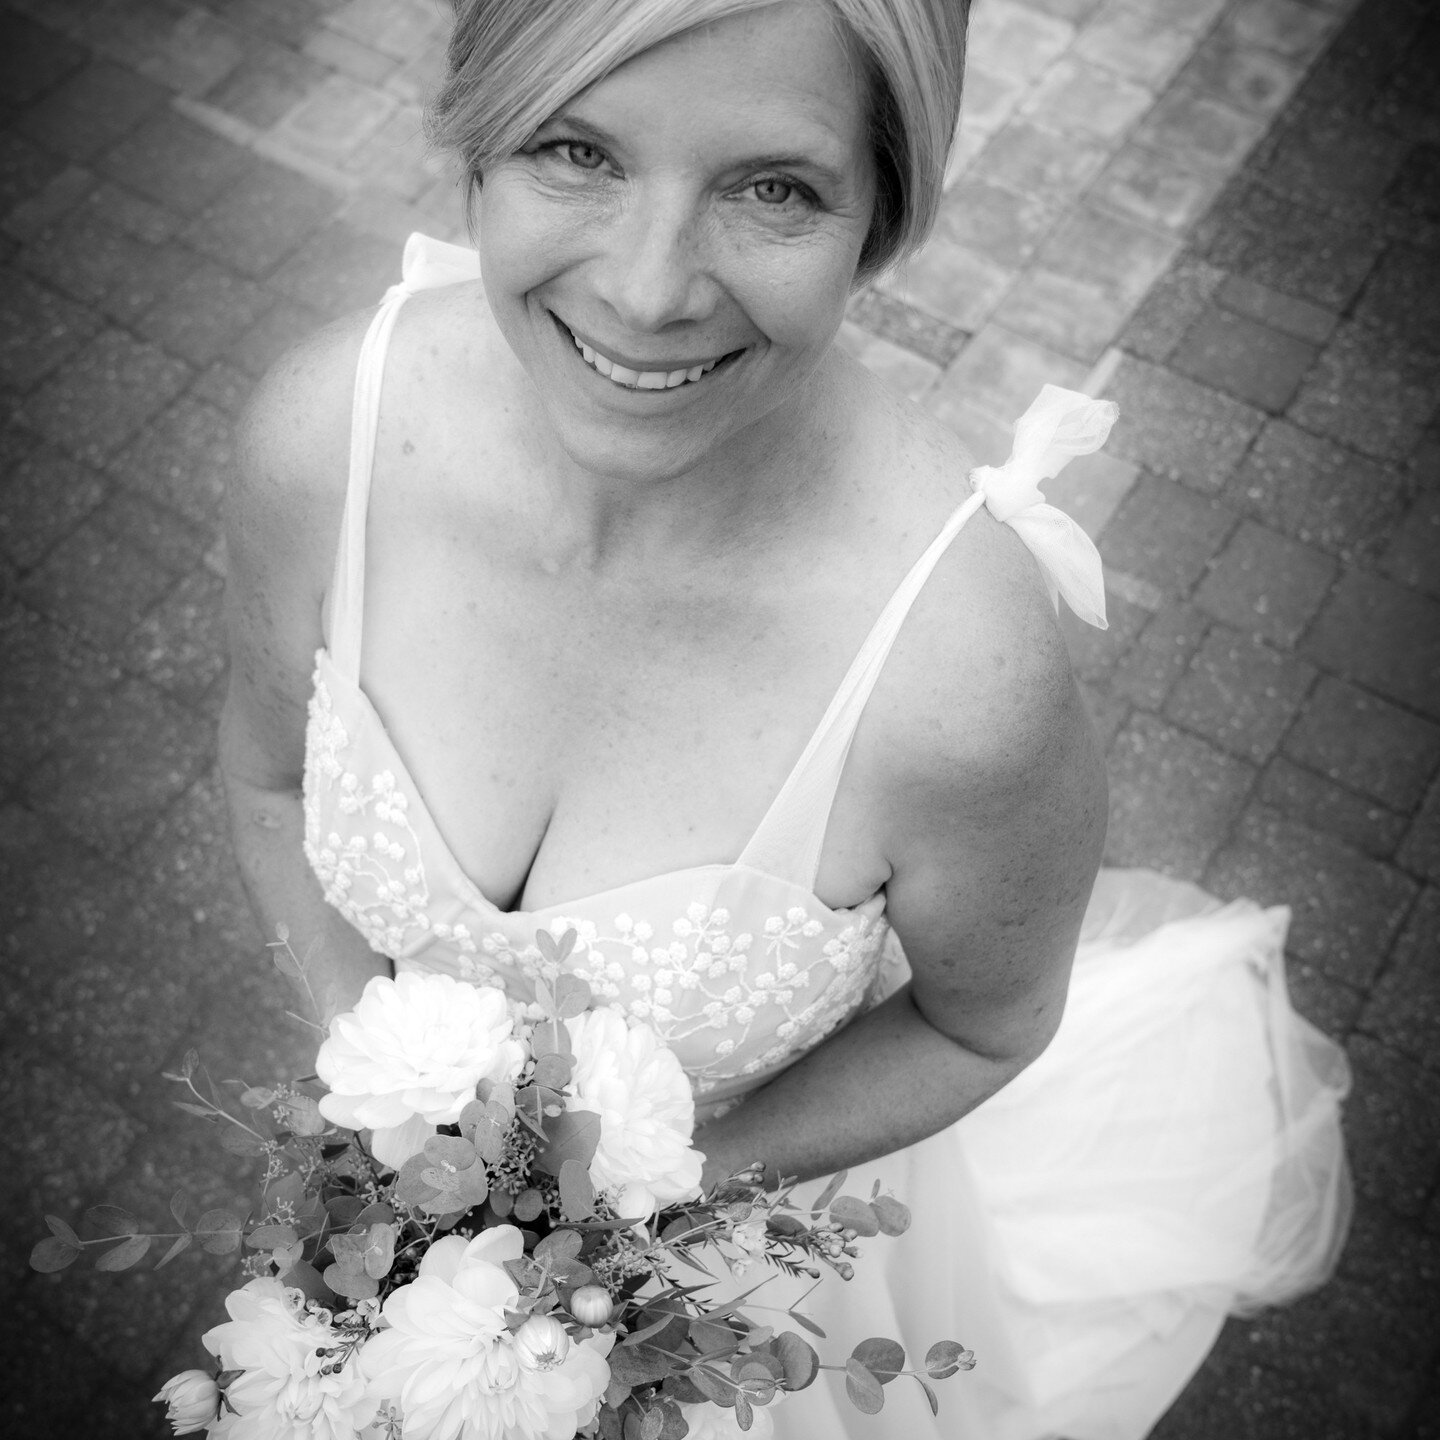 Today's bride, Sue, gets her glow on. 

#wedding #bride #love #weddingphotography #weddingdress #weddingday #weddinginspiration #photography #fashion #bridal #prewedding #weddingphotographer #weddings #instagram #beautiful #flowers